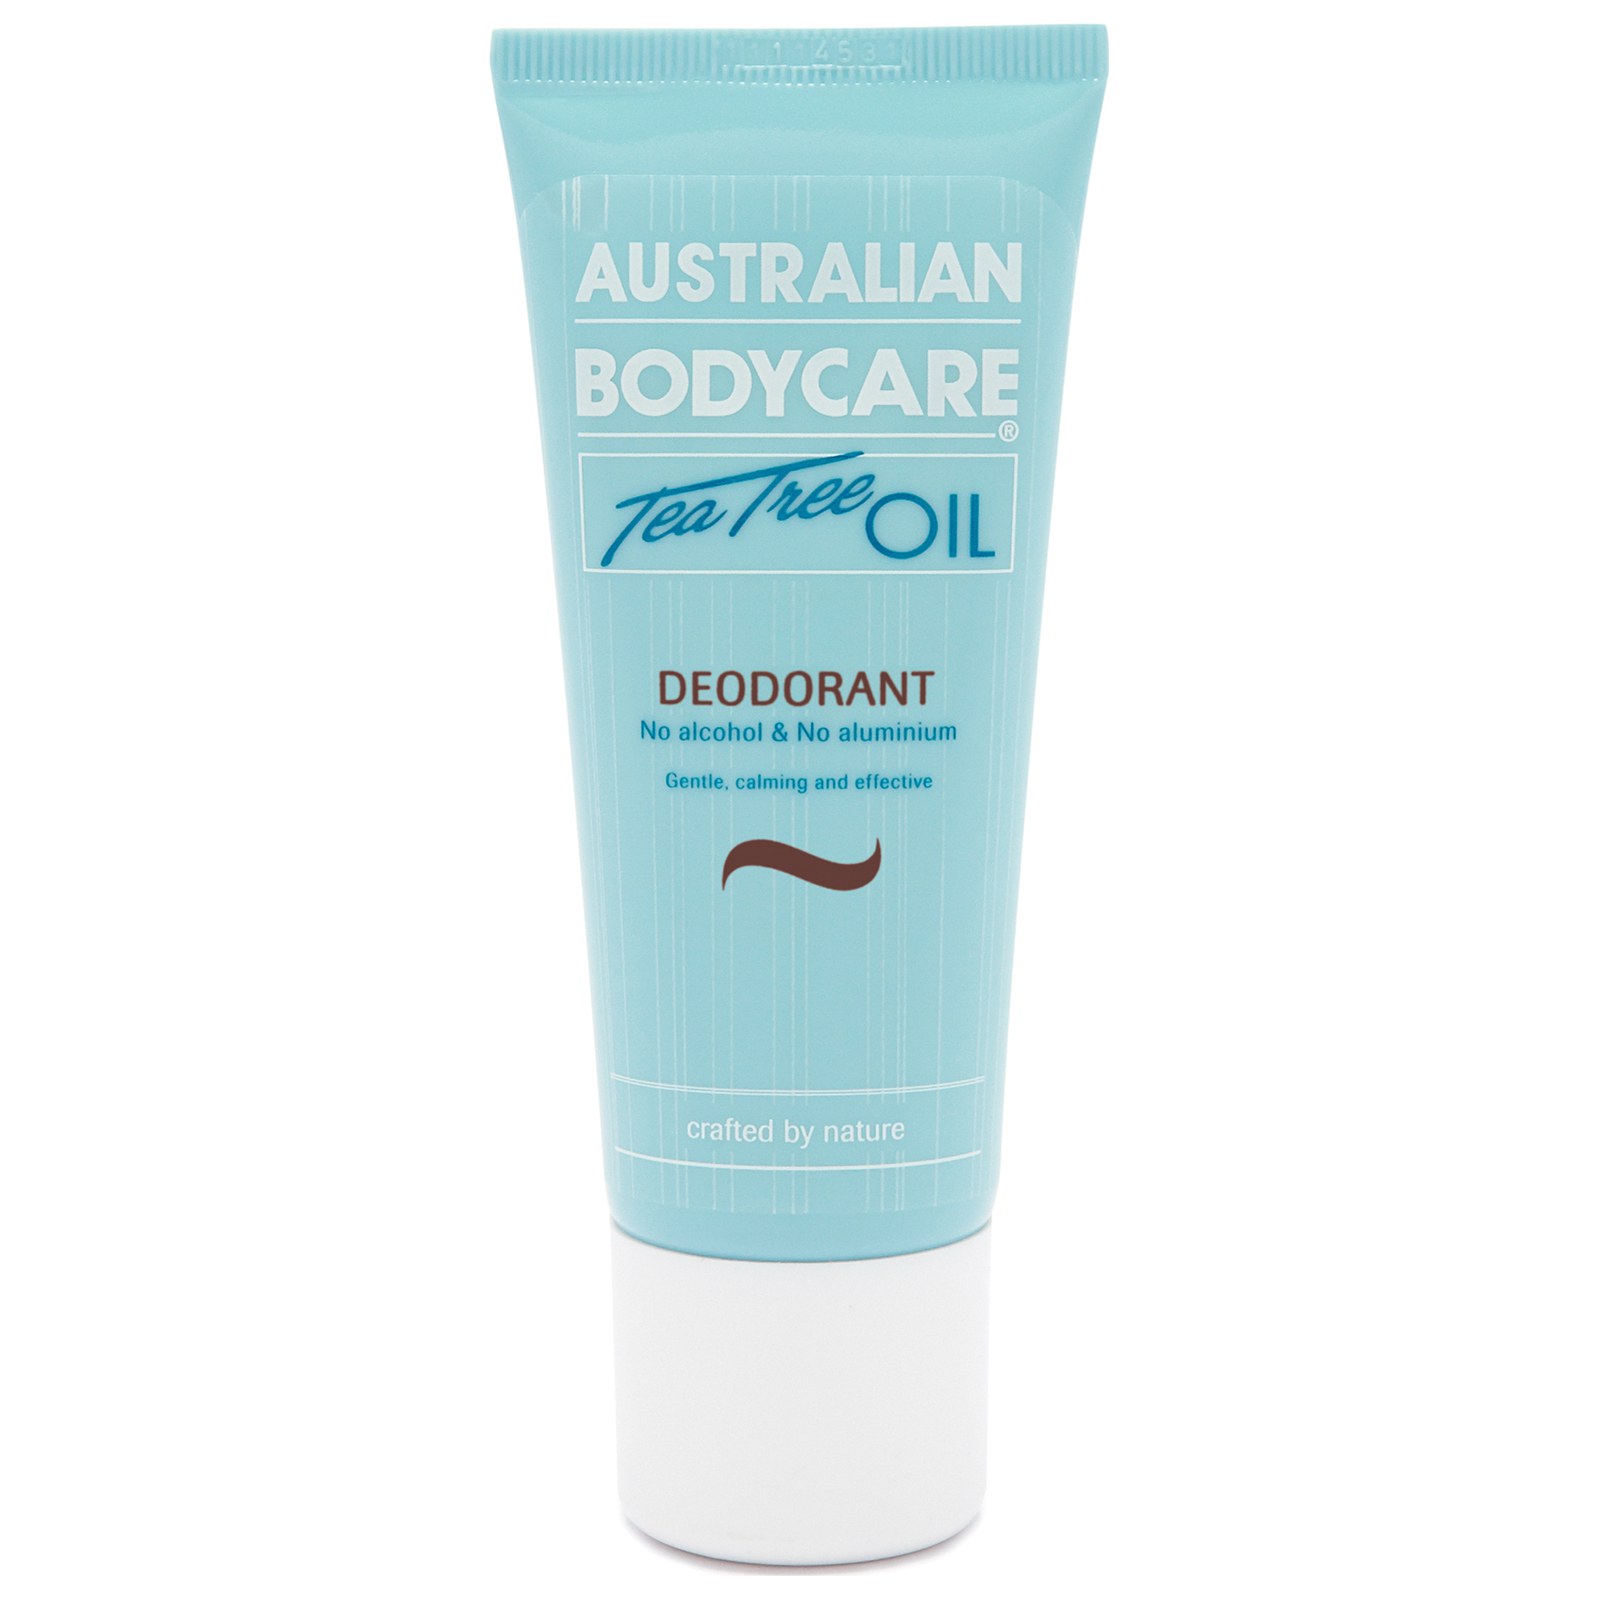 Desodorante de Australian Bodycare (65 ml)